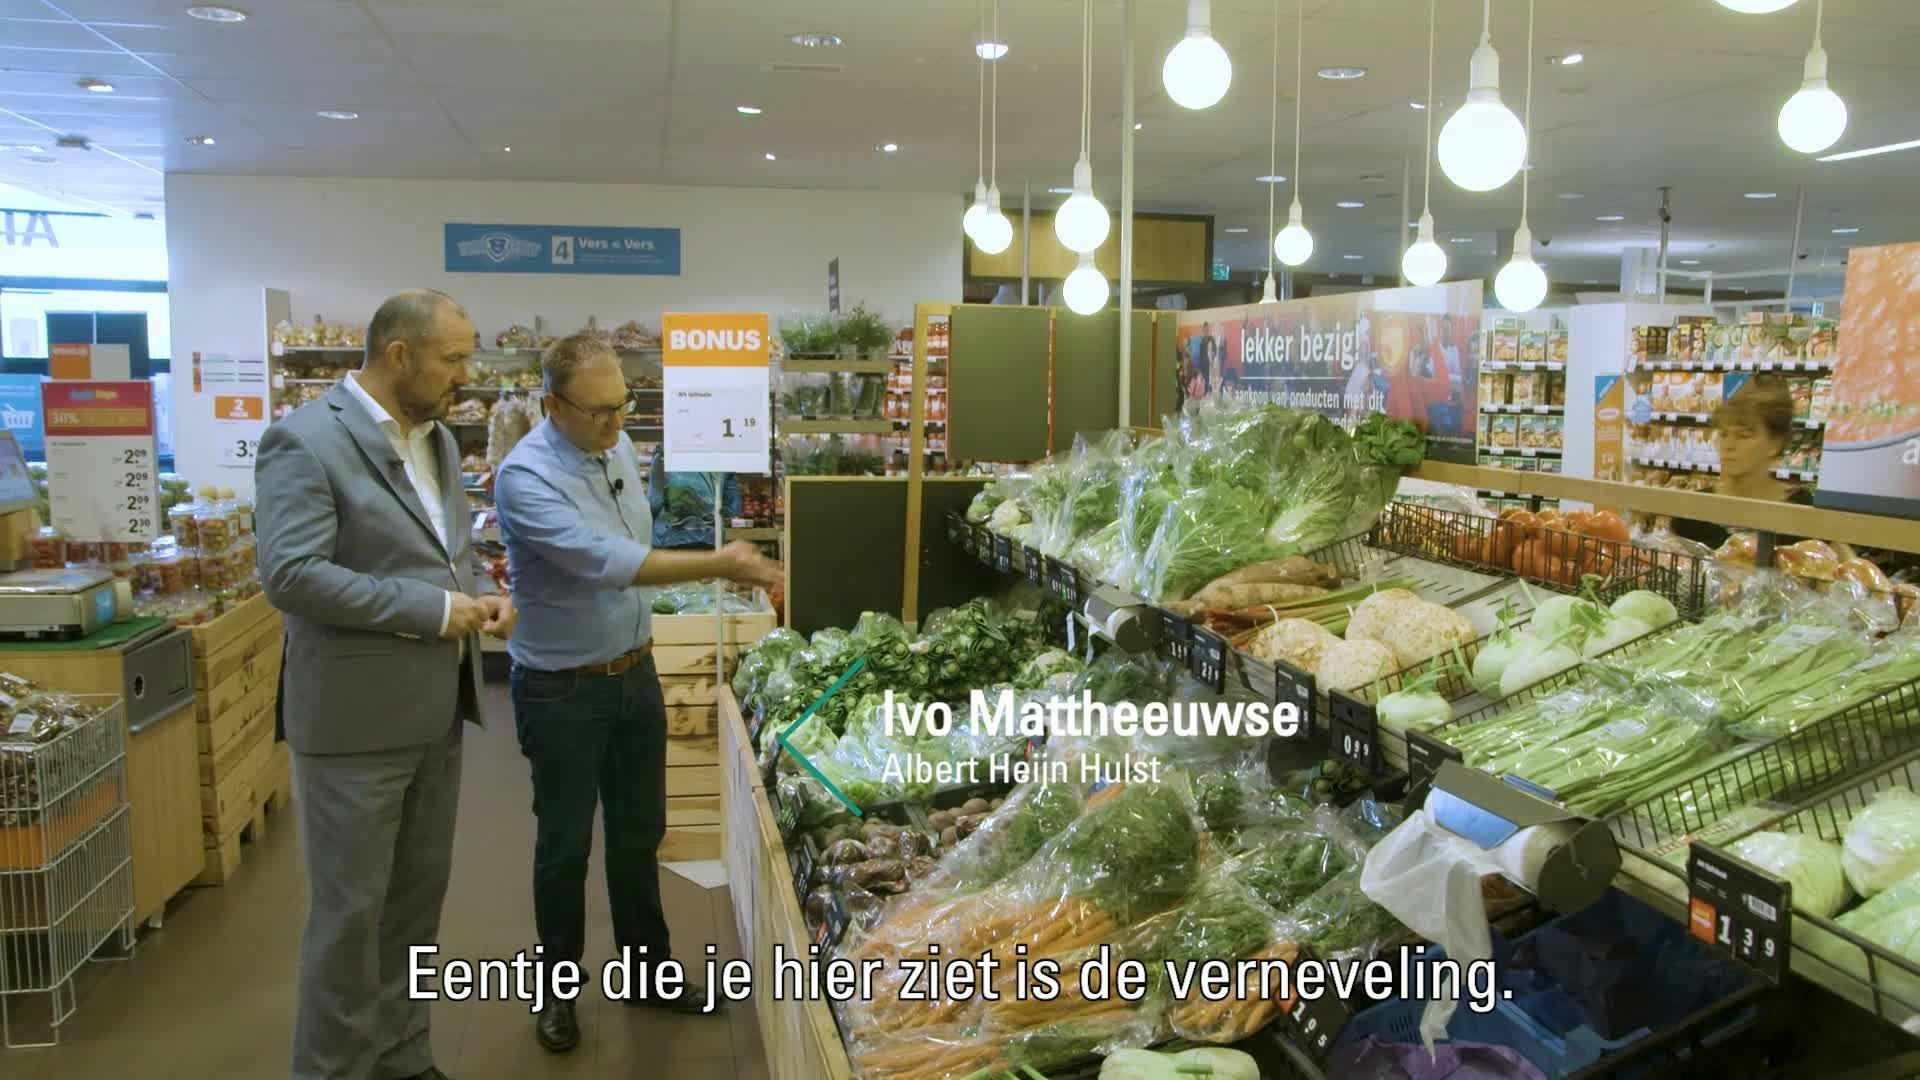 Circulair ondernemen biedt supermarktondernemer kansen